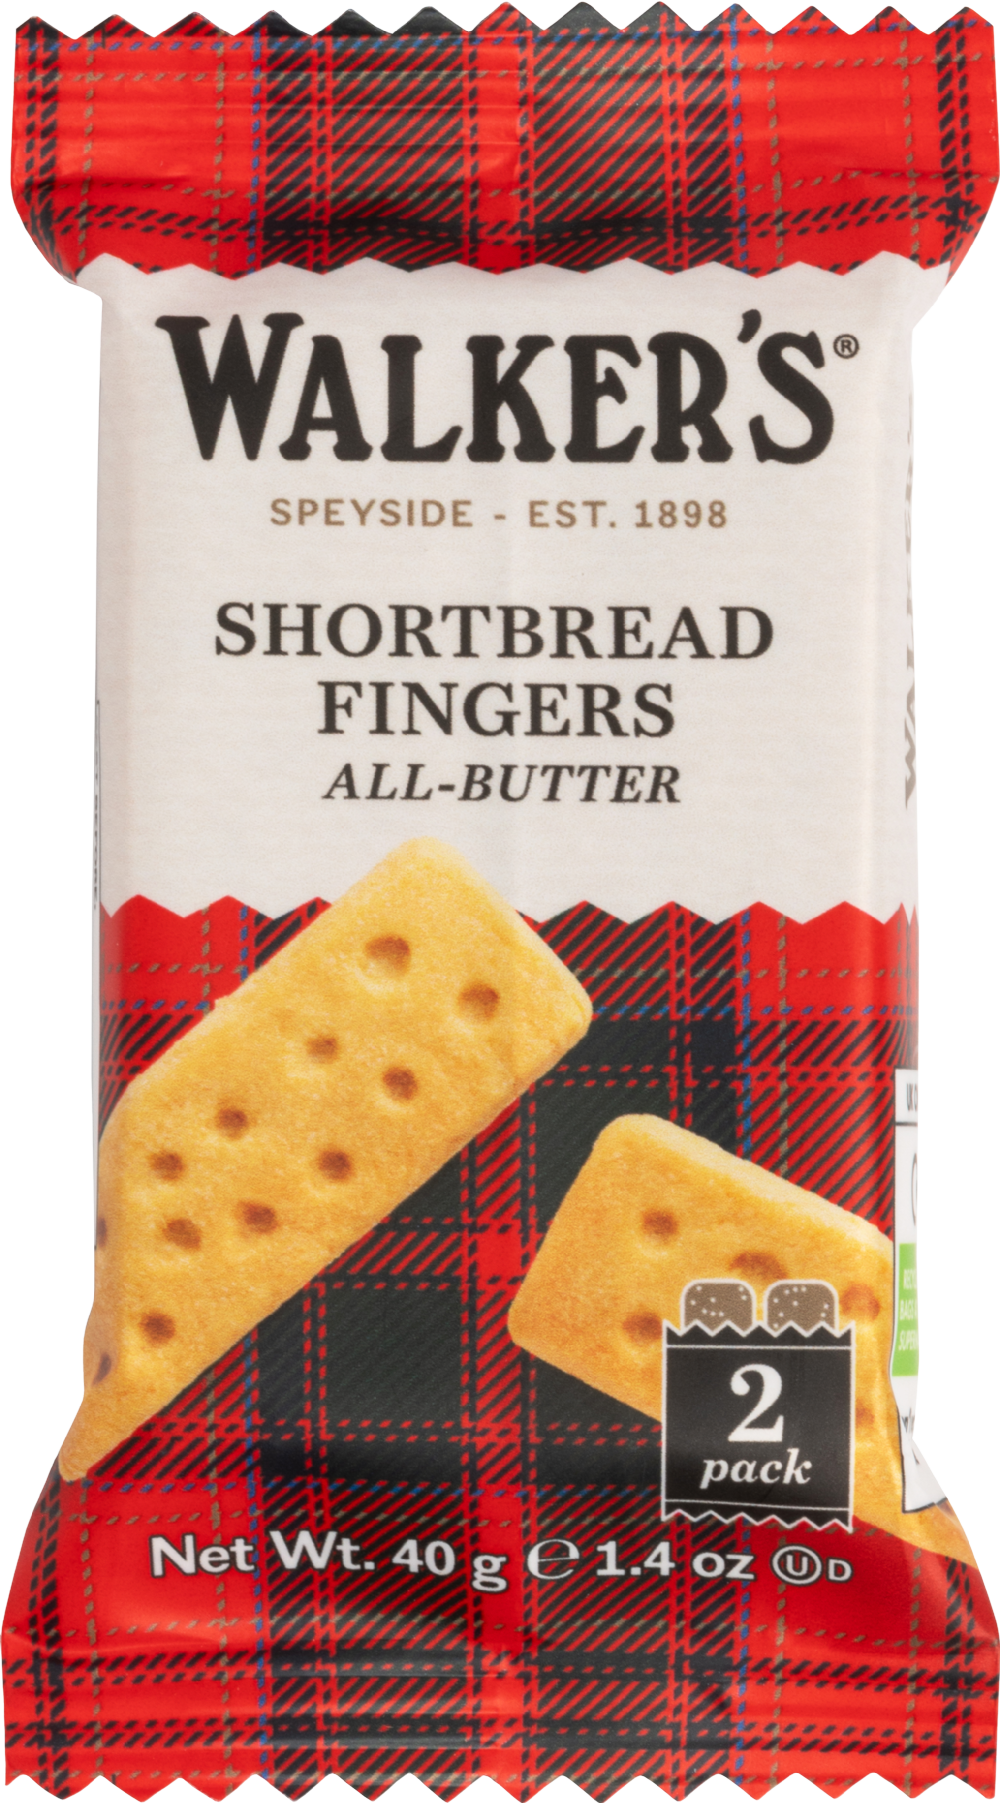 WALKERS All-Butter Shortbread Fingers - Twin Pack 40g